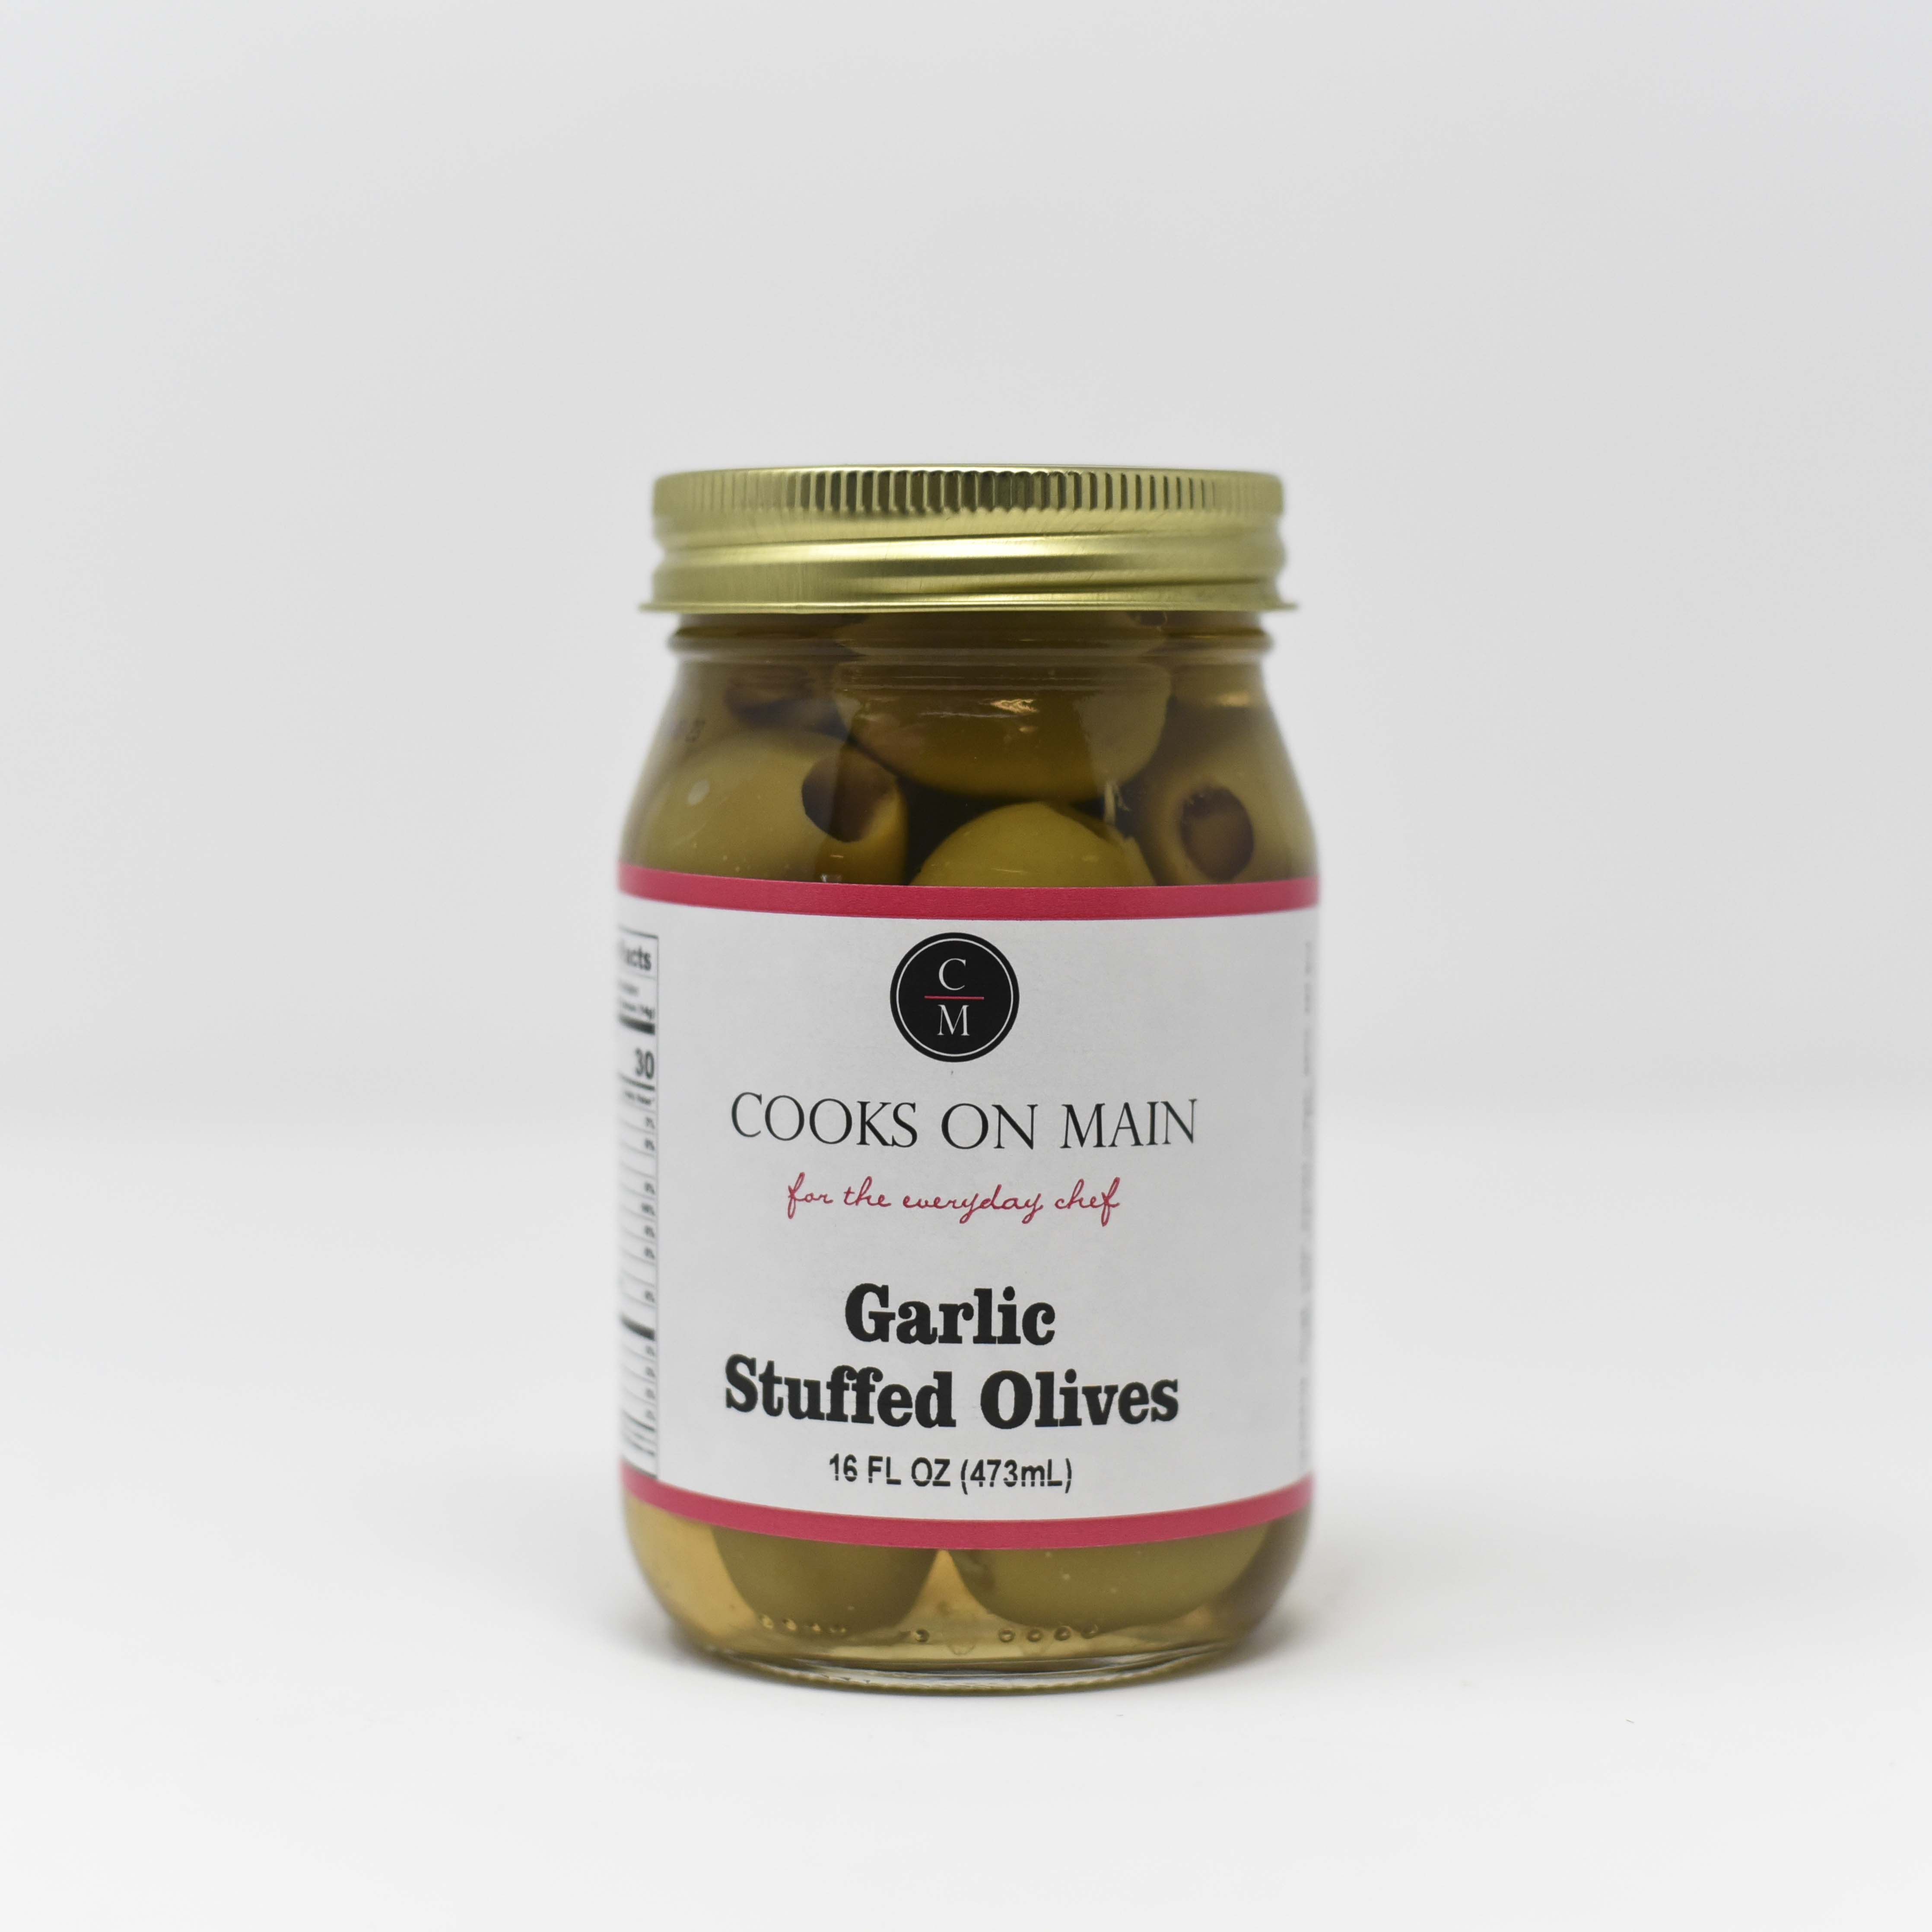 RSVP Jonas Easy Clean Garlic Press - 20547049